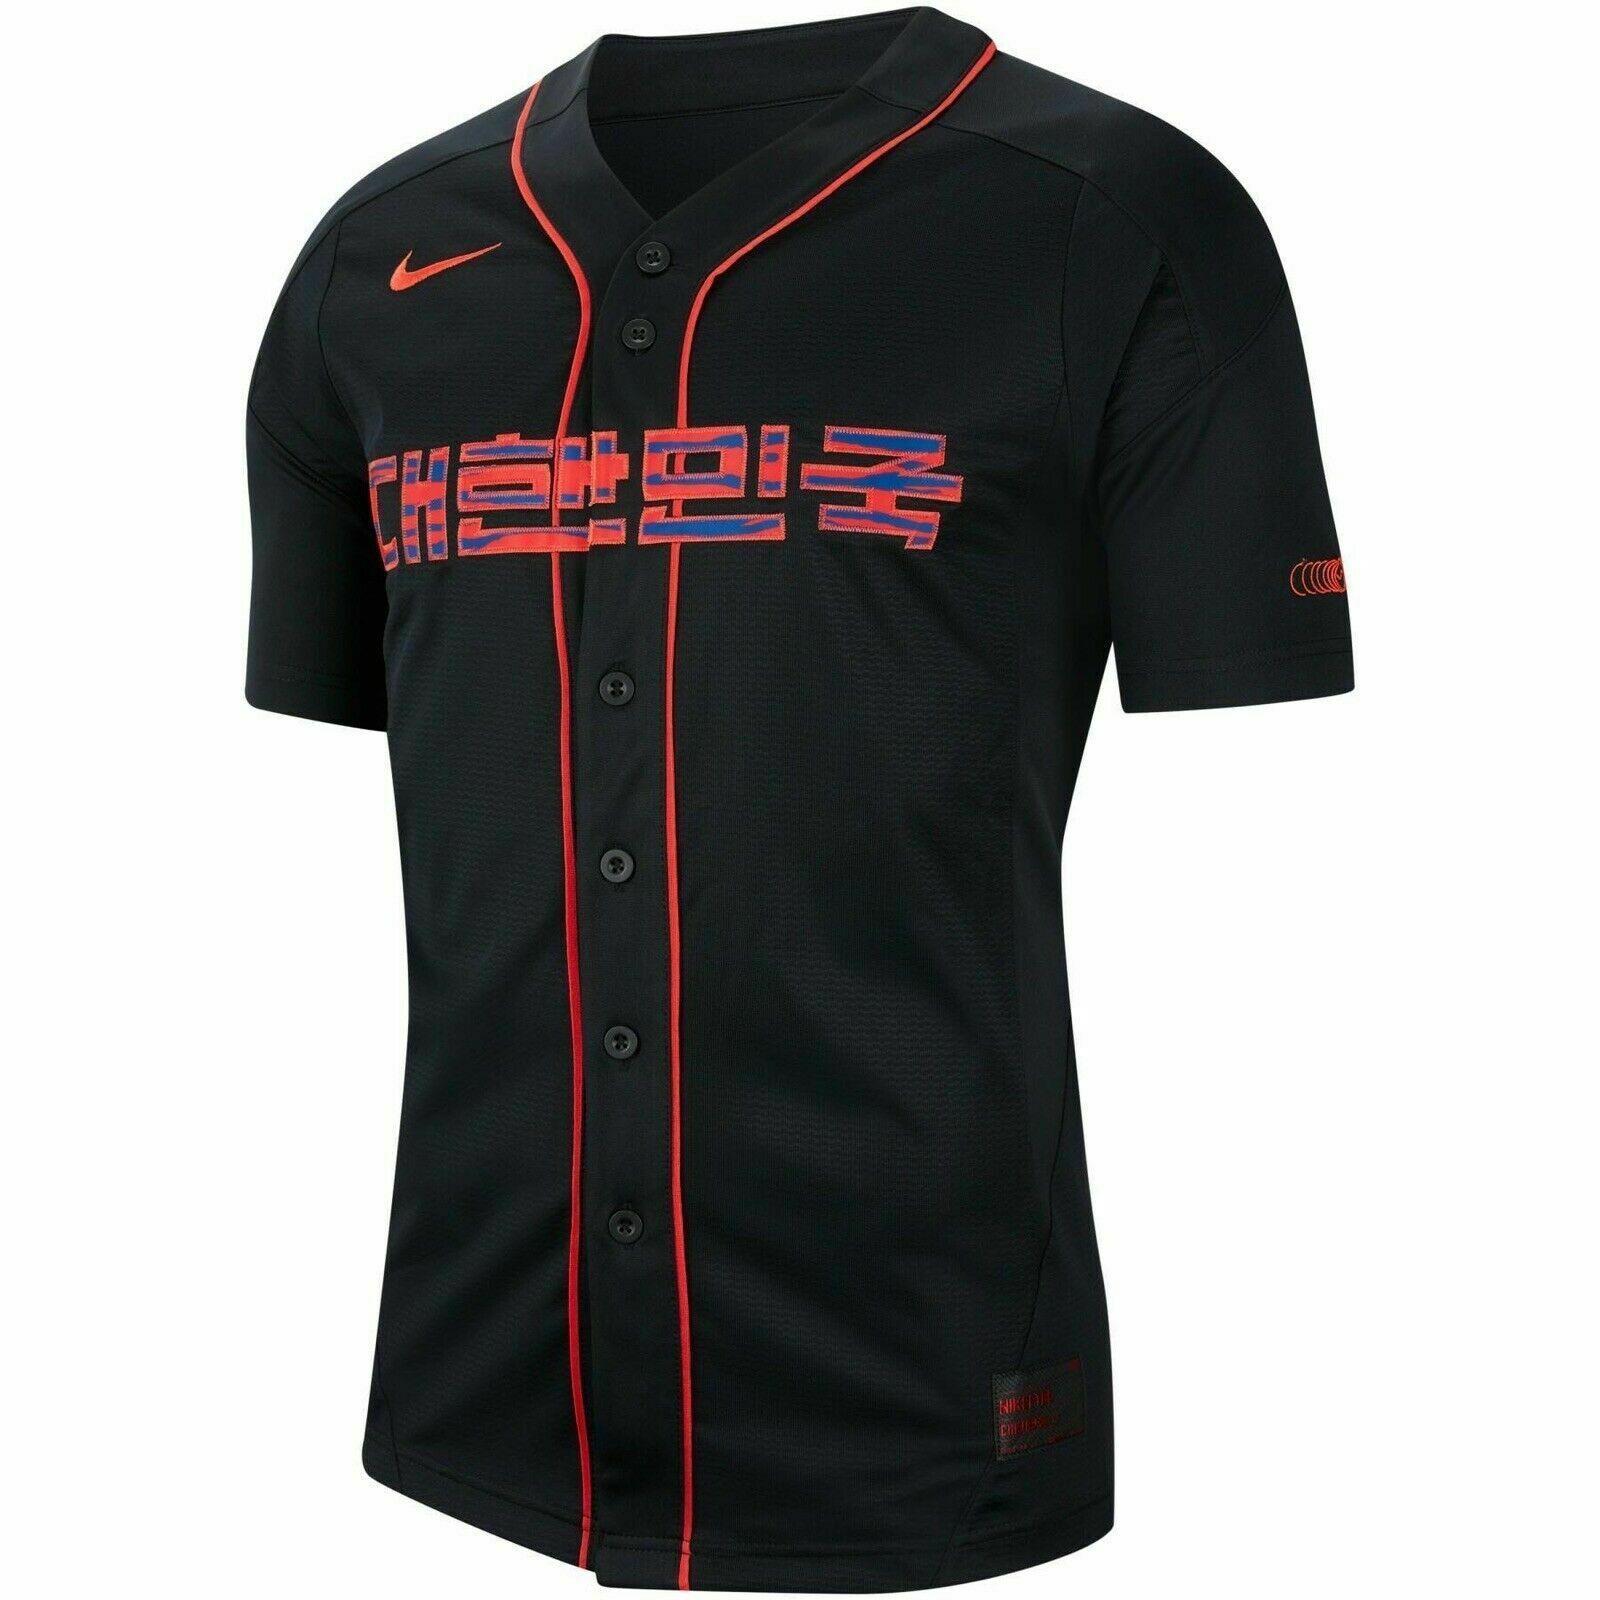 Nike Soccer Korea Baseball Short Sleeve Jersey Black CQ9249-010 Size XL Rare